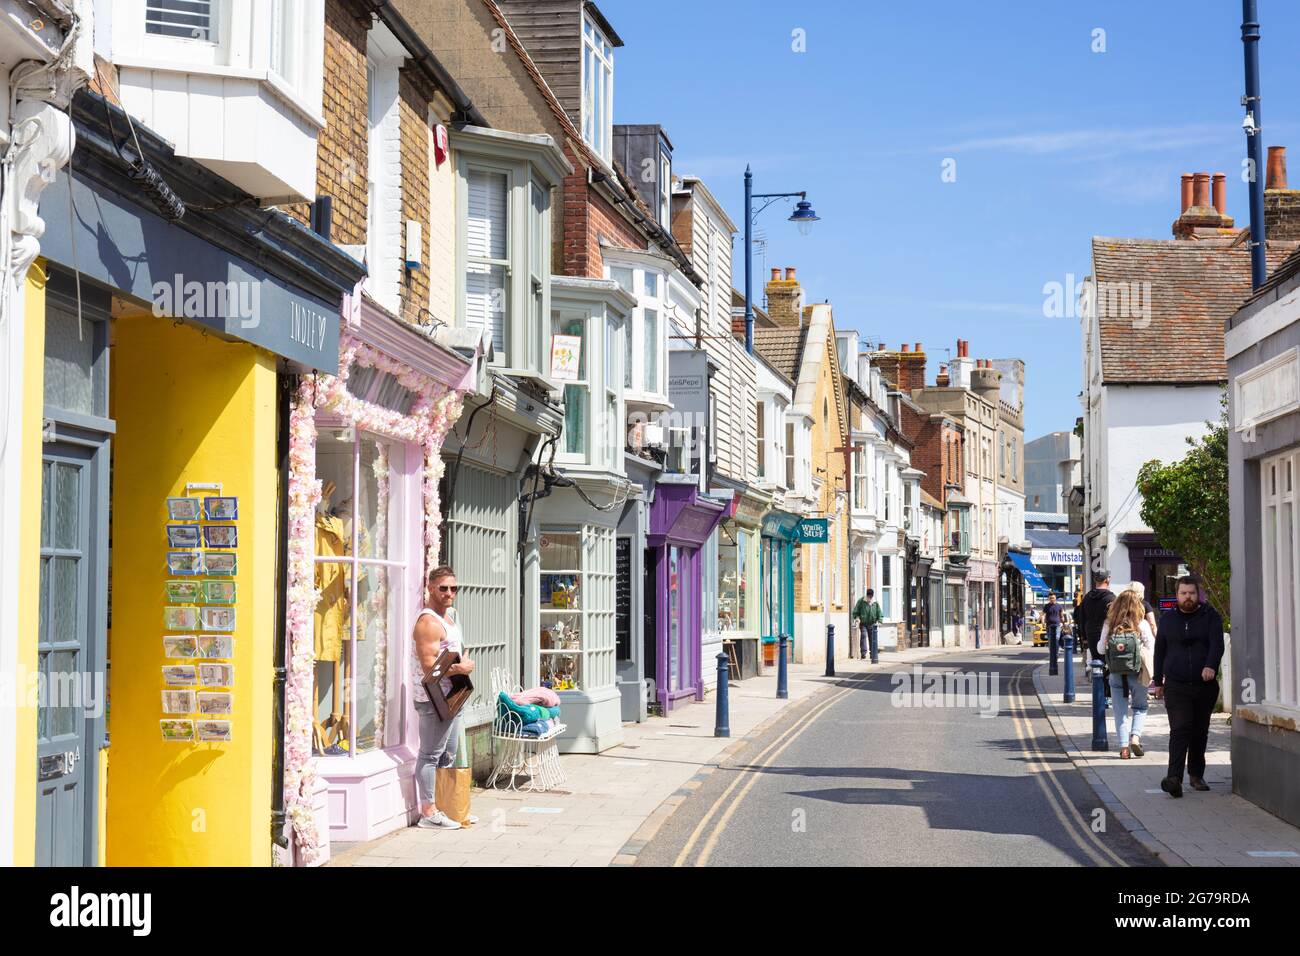 Negozi dai colori vivaci nel centro di Harbour Street Whitstable Kent England UK GB Europe Foto Stock